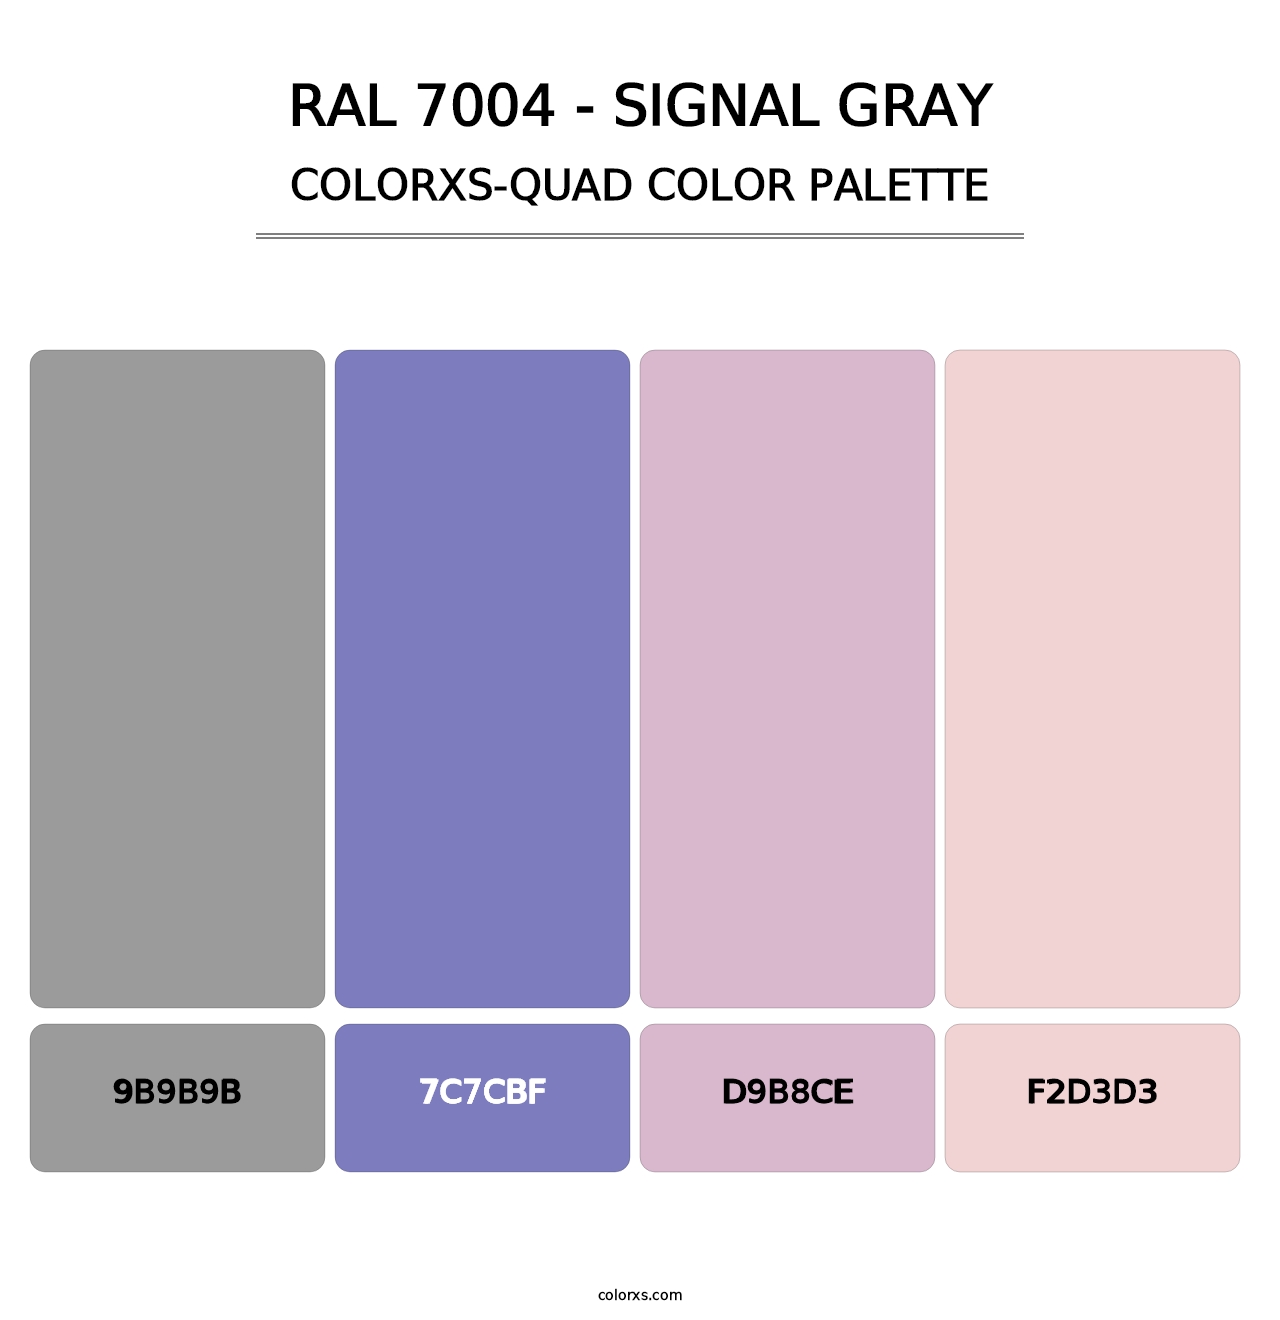 RAL 7004 - Signal Gray - Colorxs Quad Palette